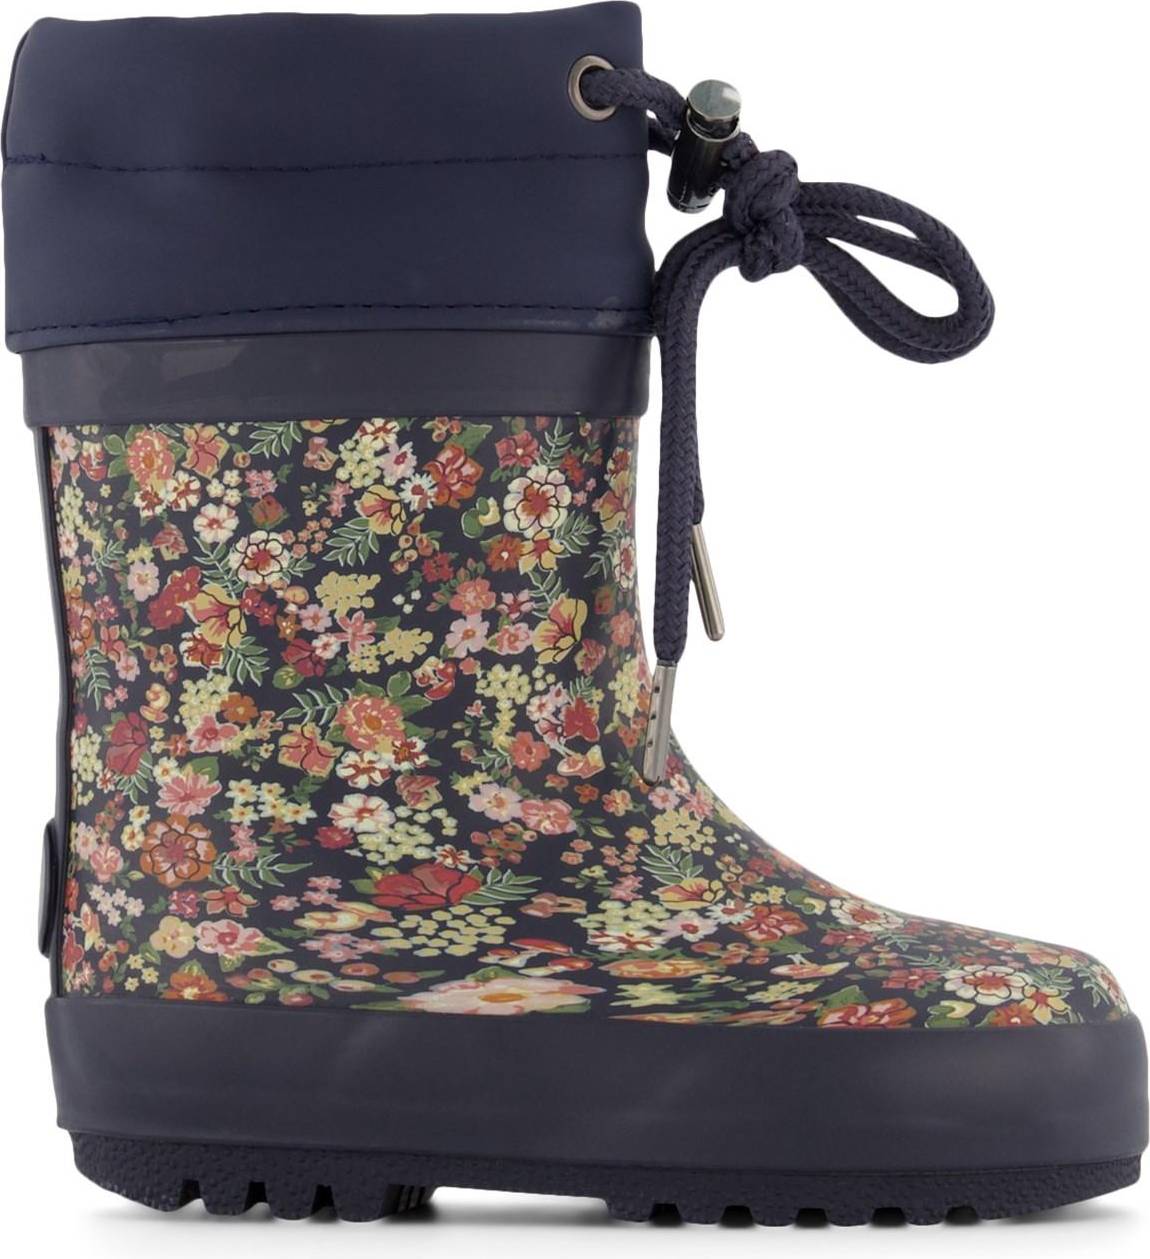  Bild på Wheat Thermo Rubber Boots - Ink Flowers gummistövlar